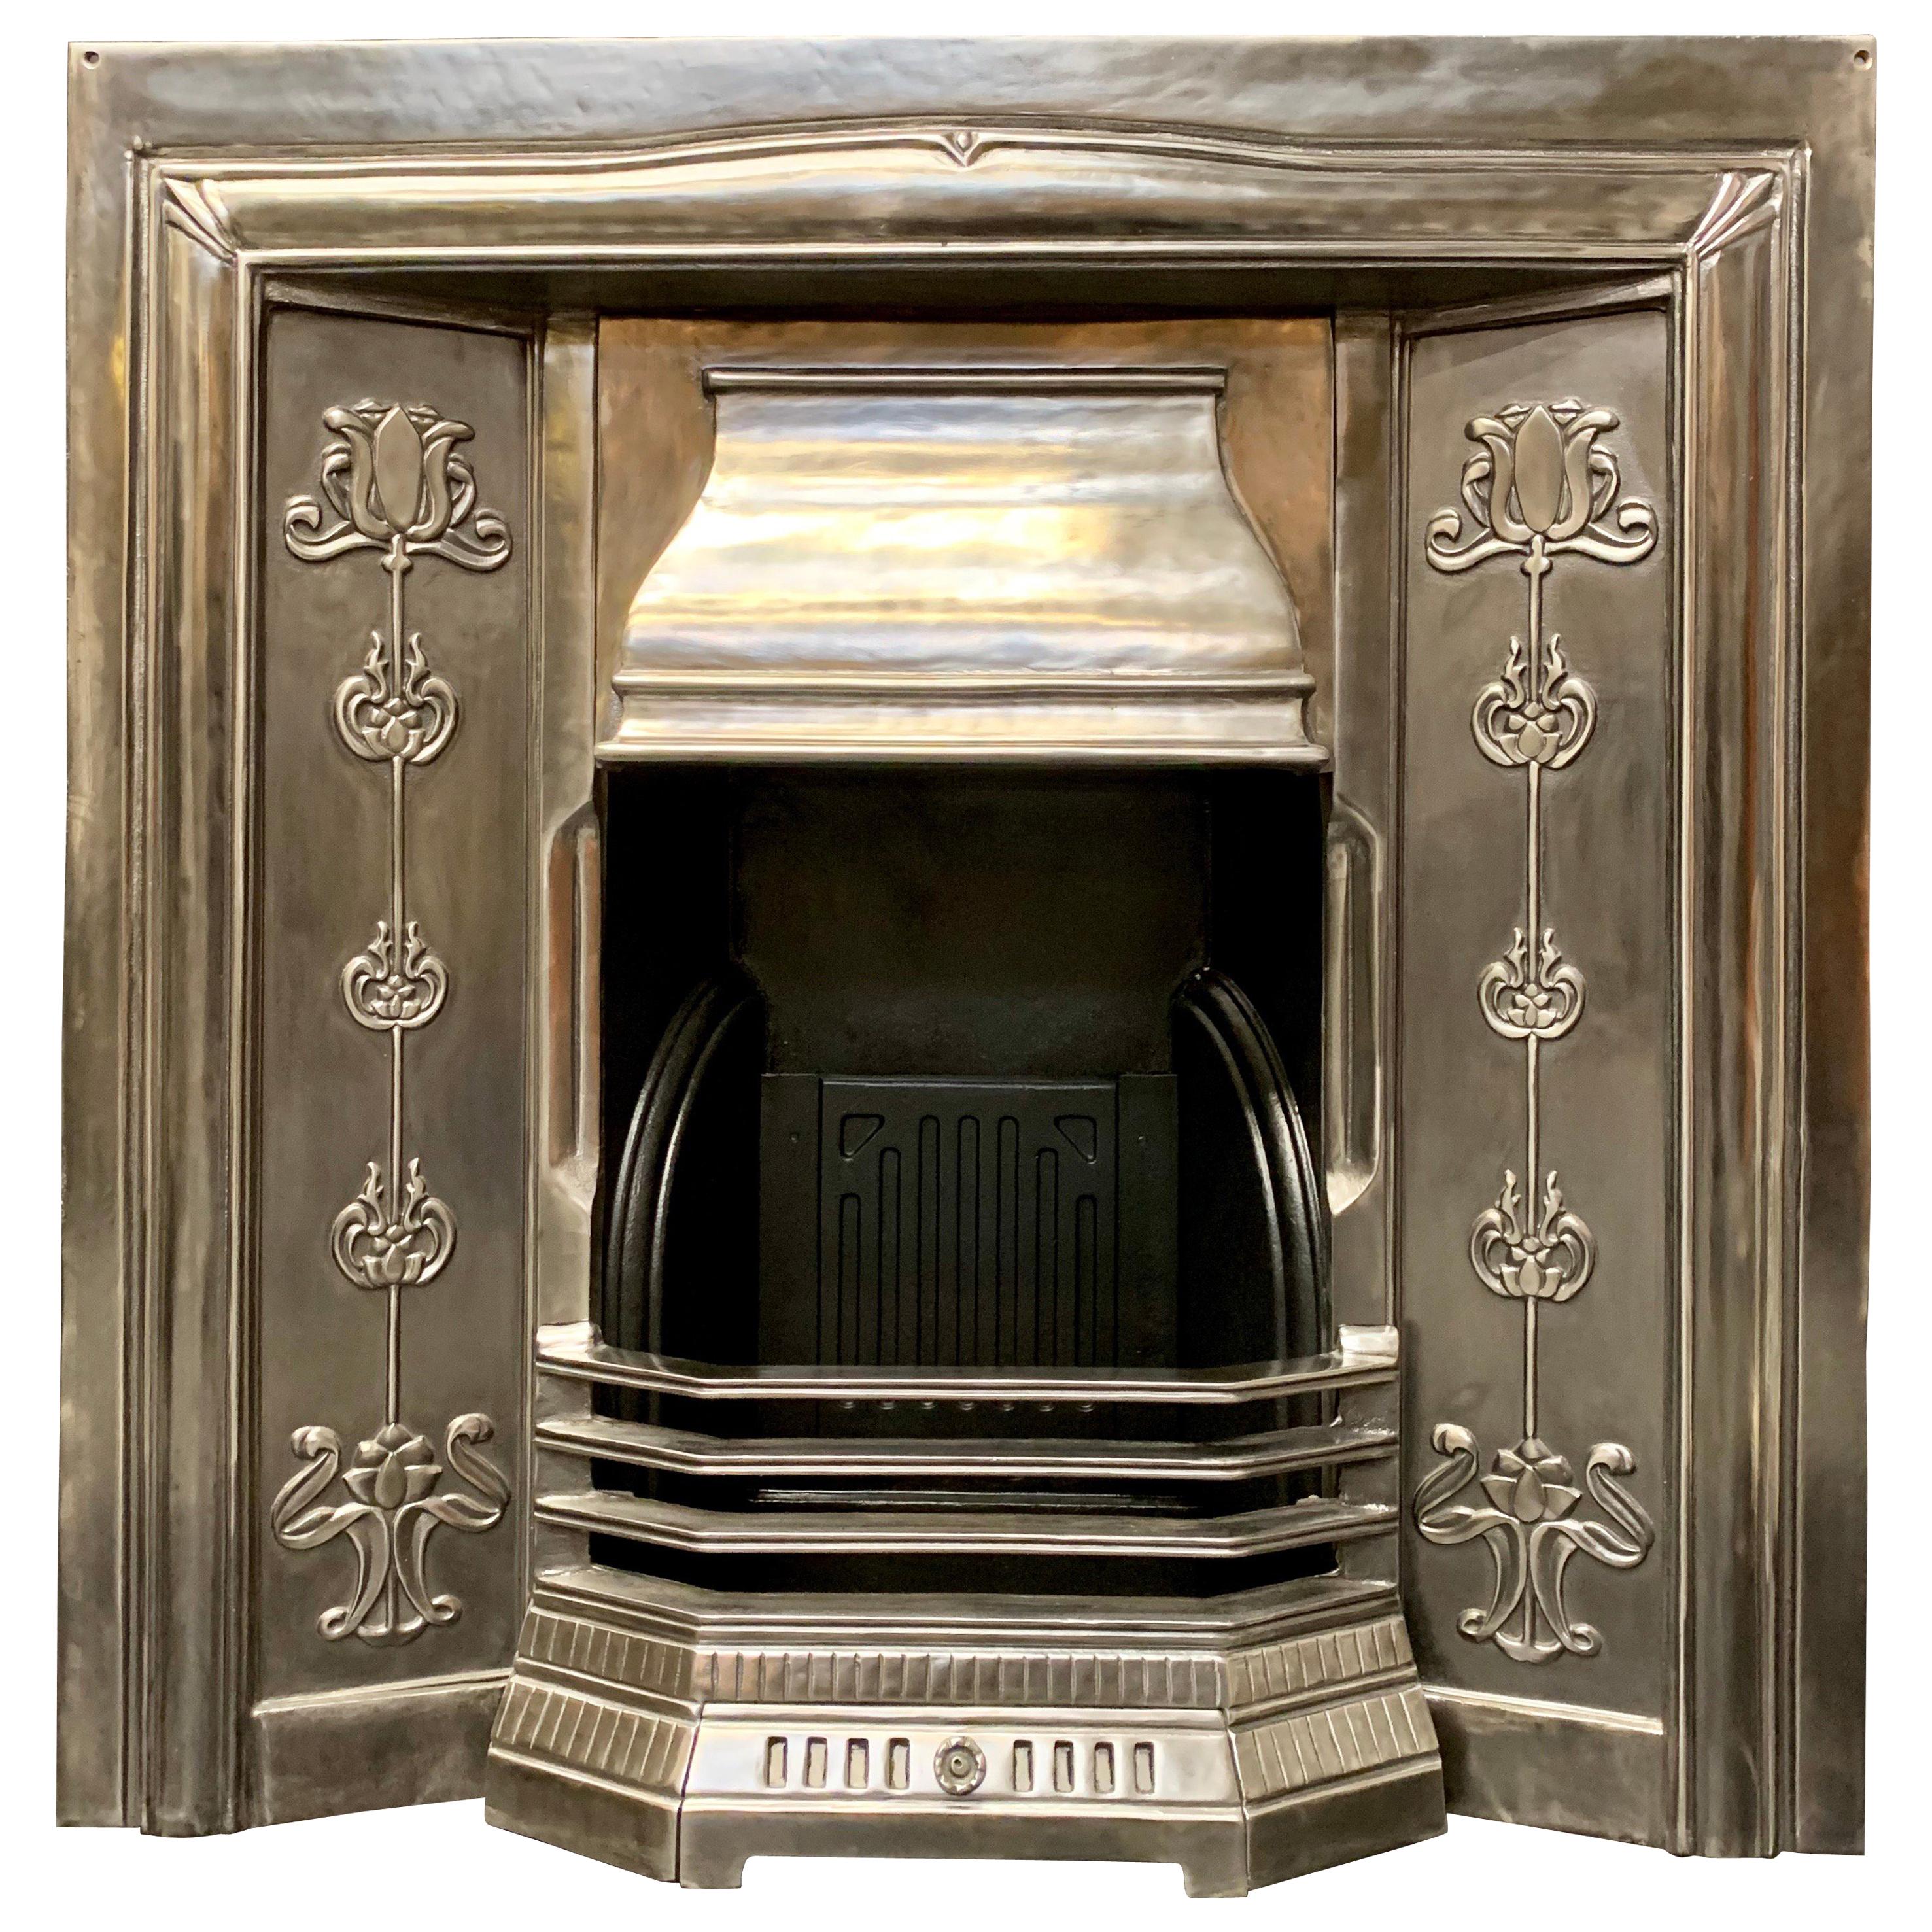 Period Art Nouveau Style Polished Steel Fireplace Insert